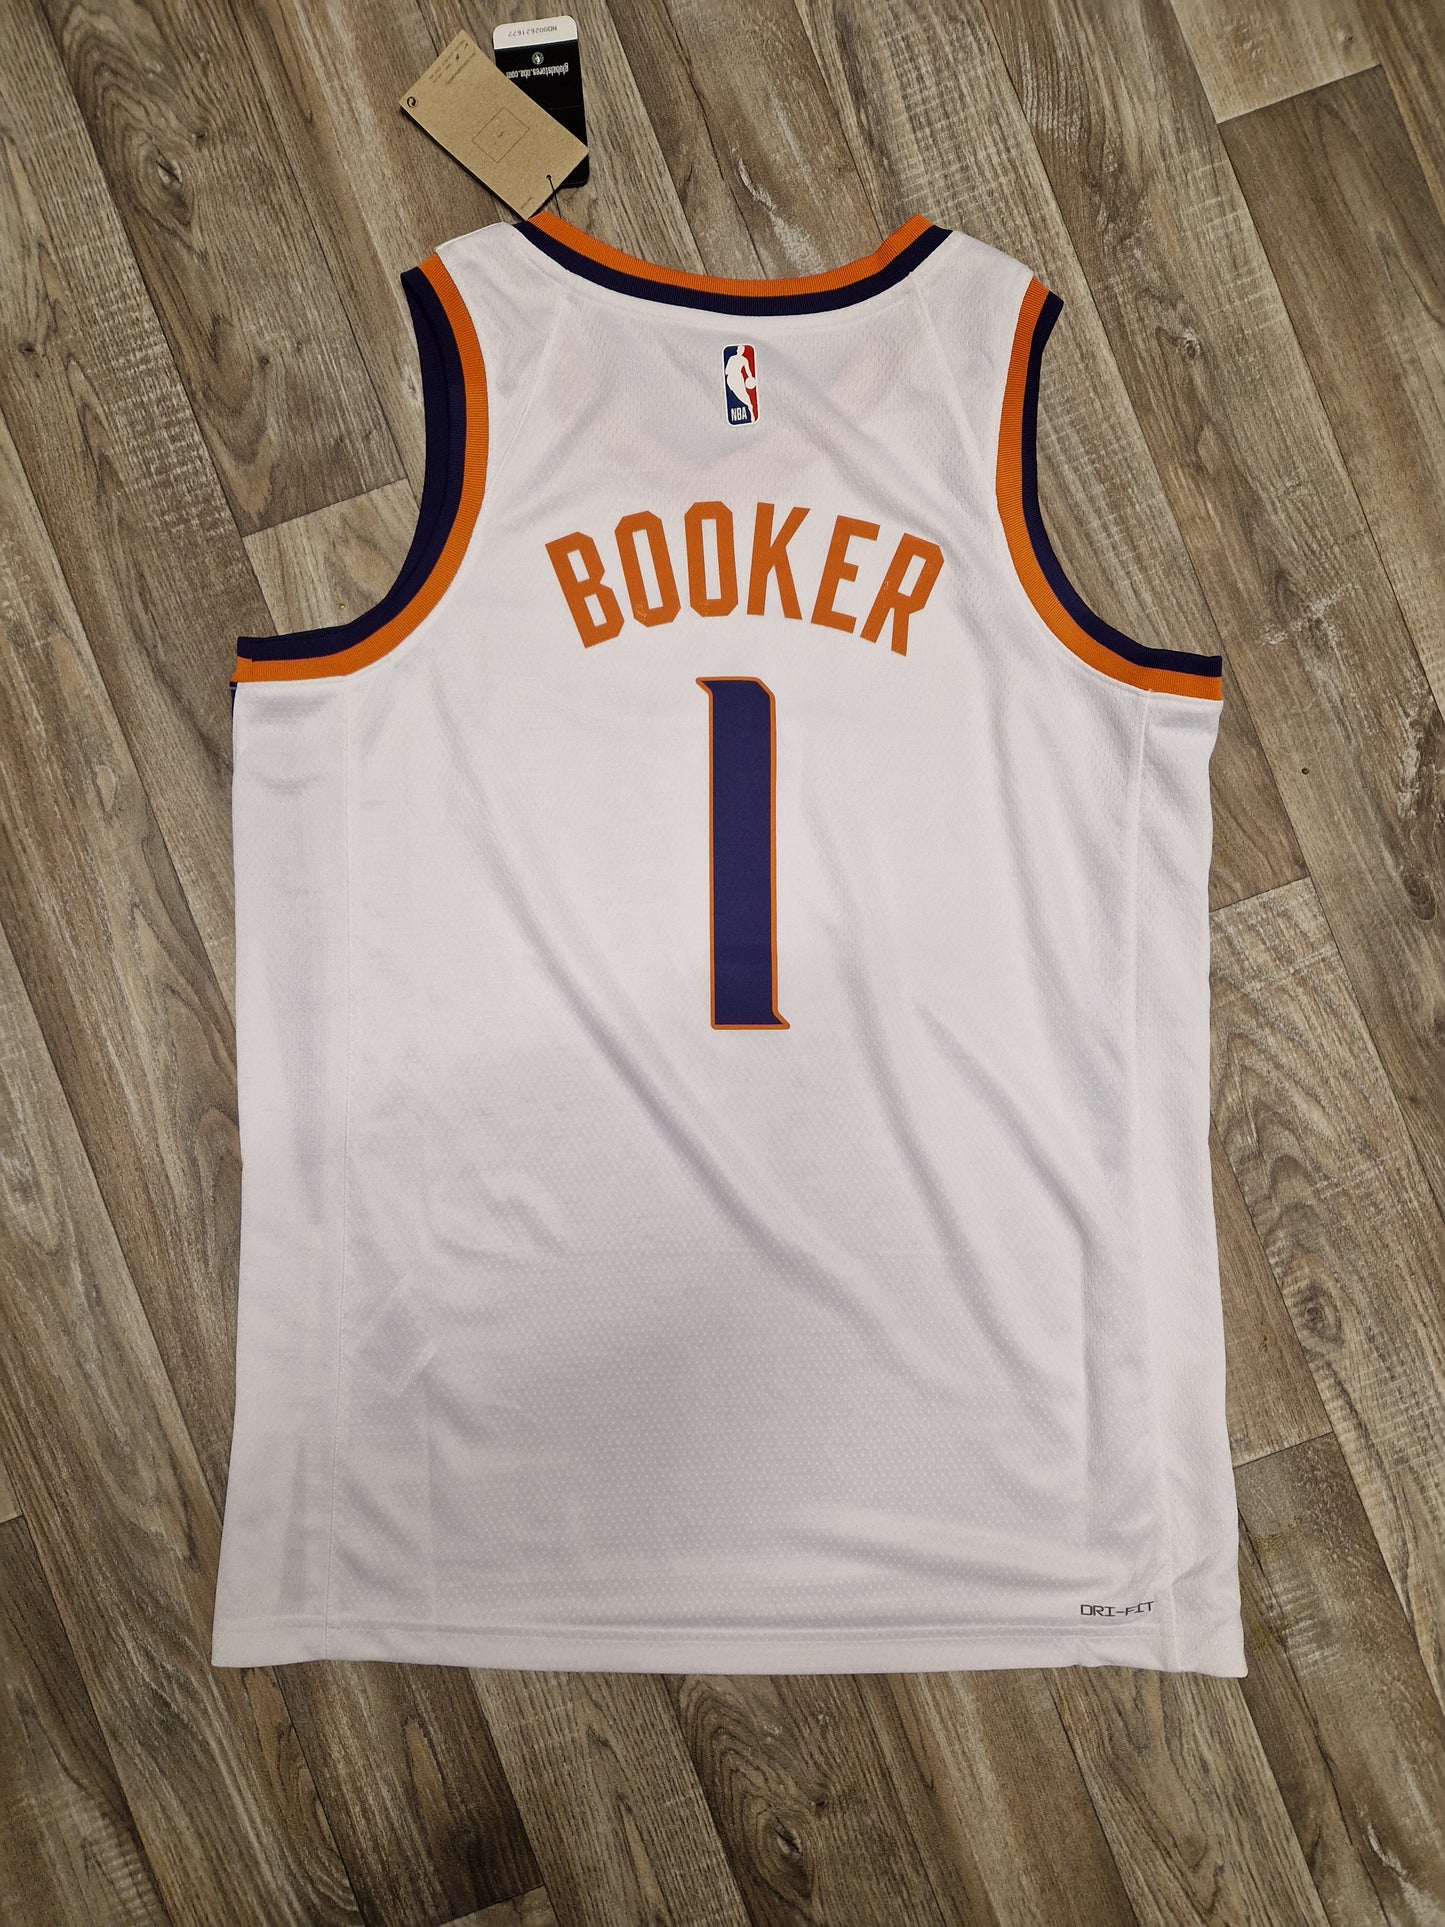 Devin Booker Phoenix Suns Jersey Size Large